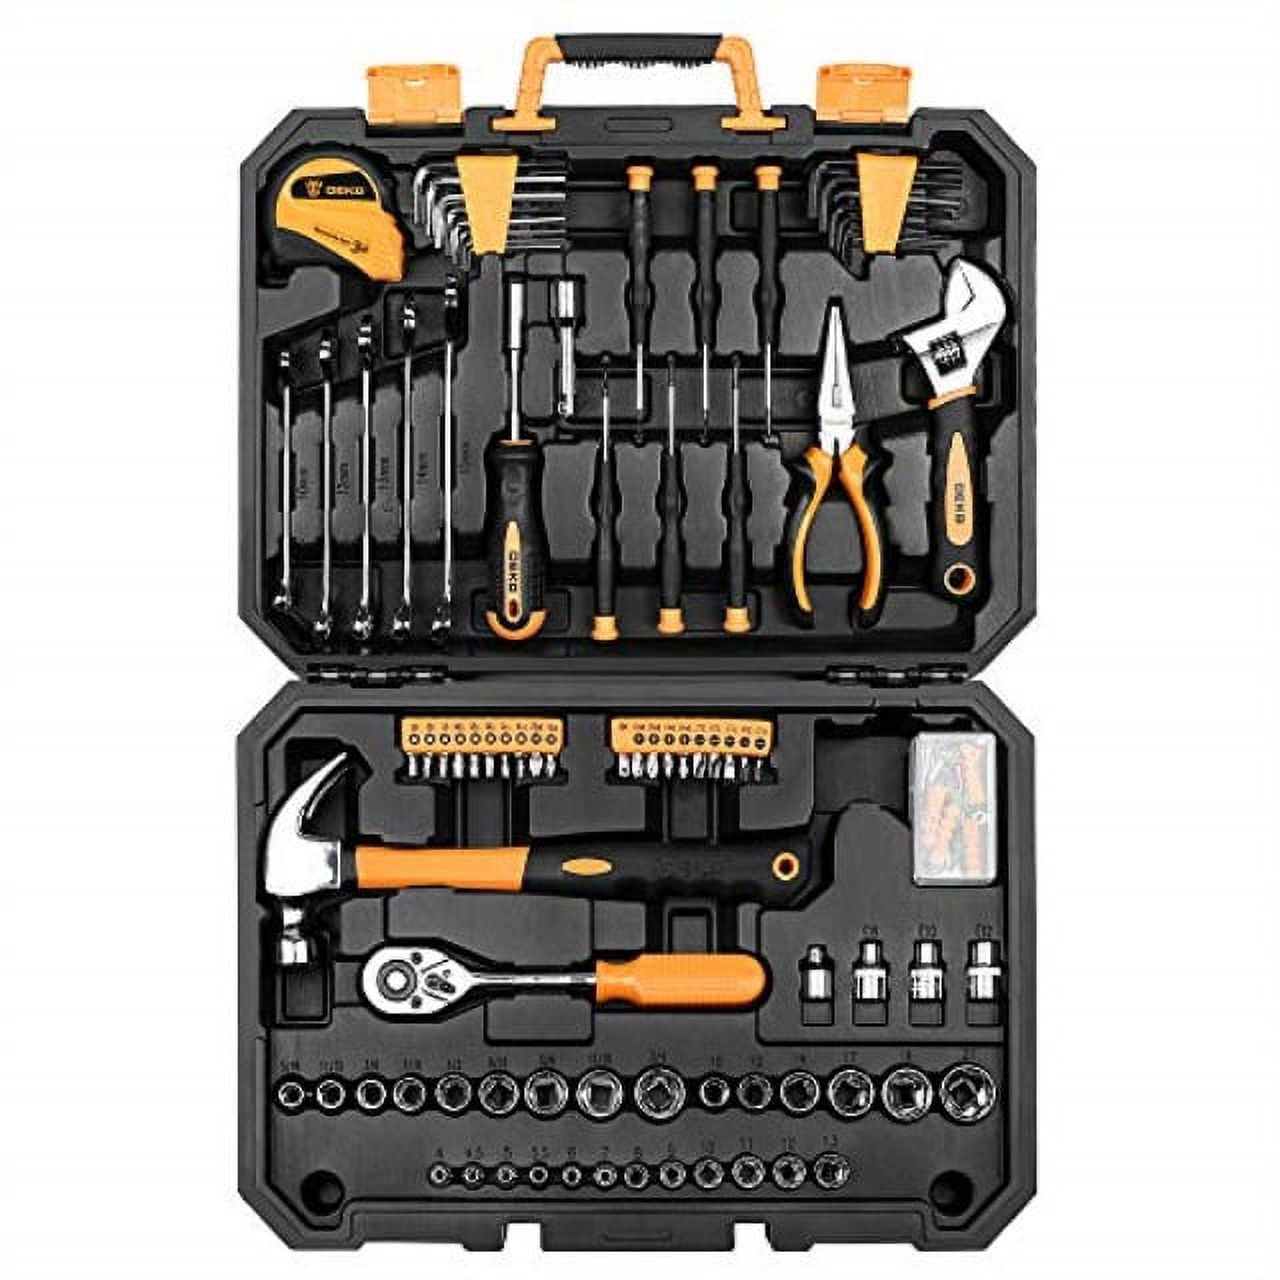 dekopro 128 piece tool set-general household hand tool kit, auto repair tool set, with plastic toolbox storage case - image 1 of 8